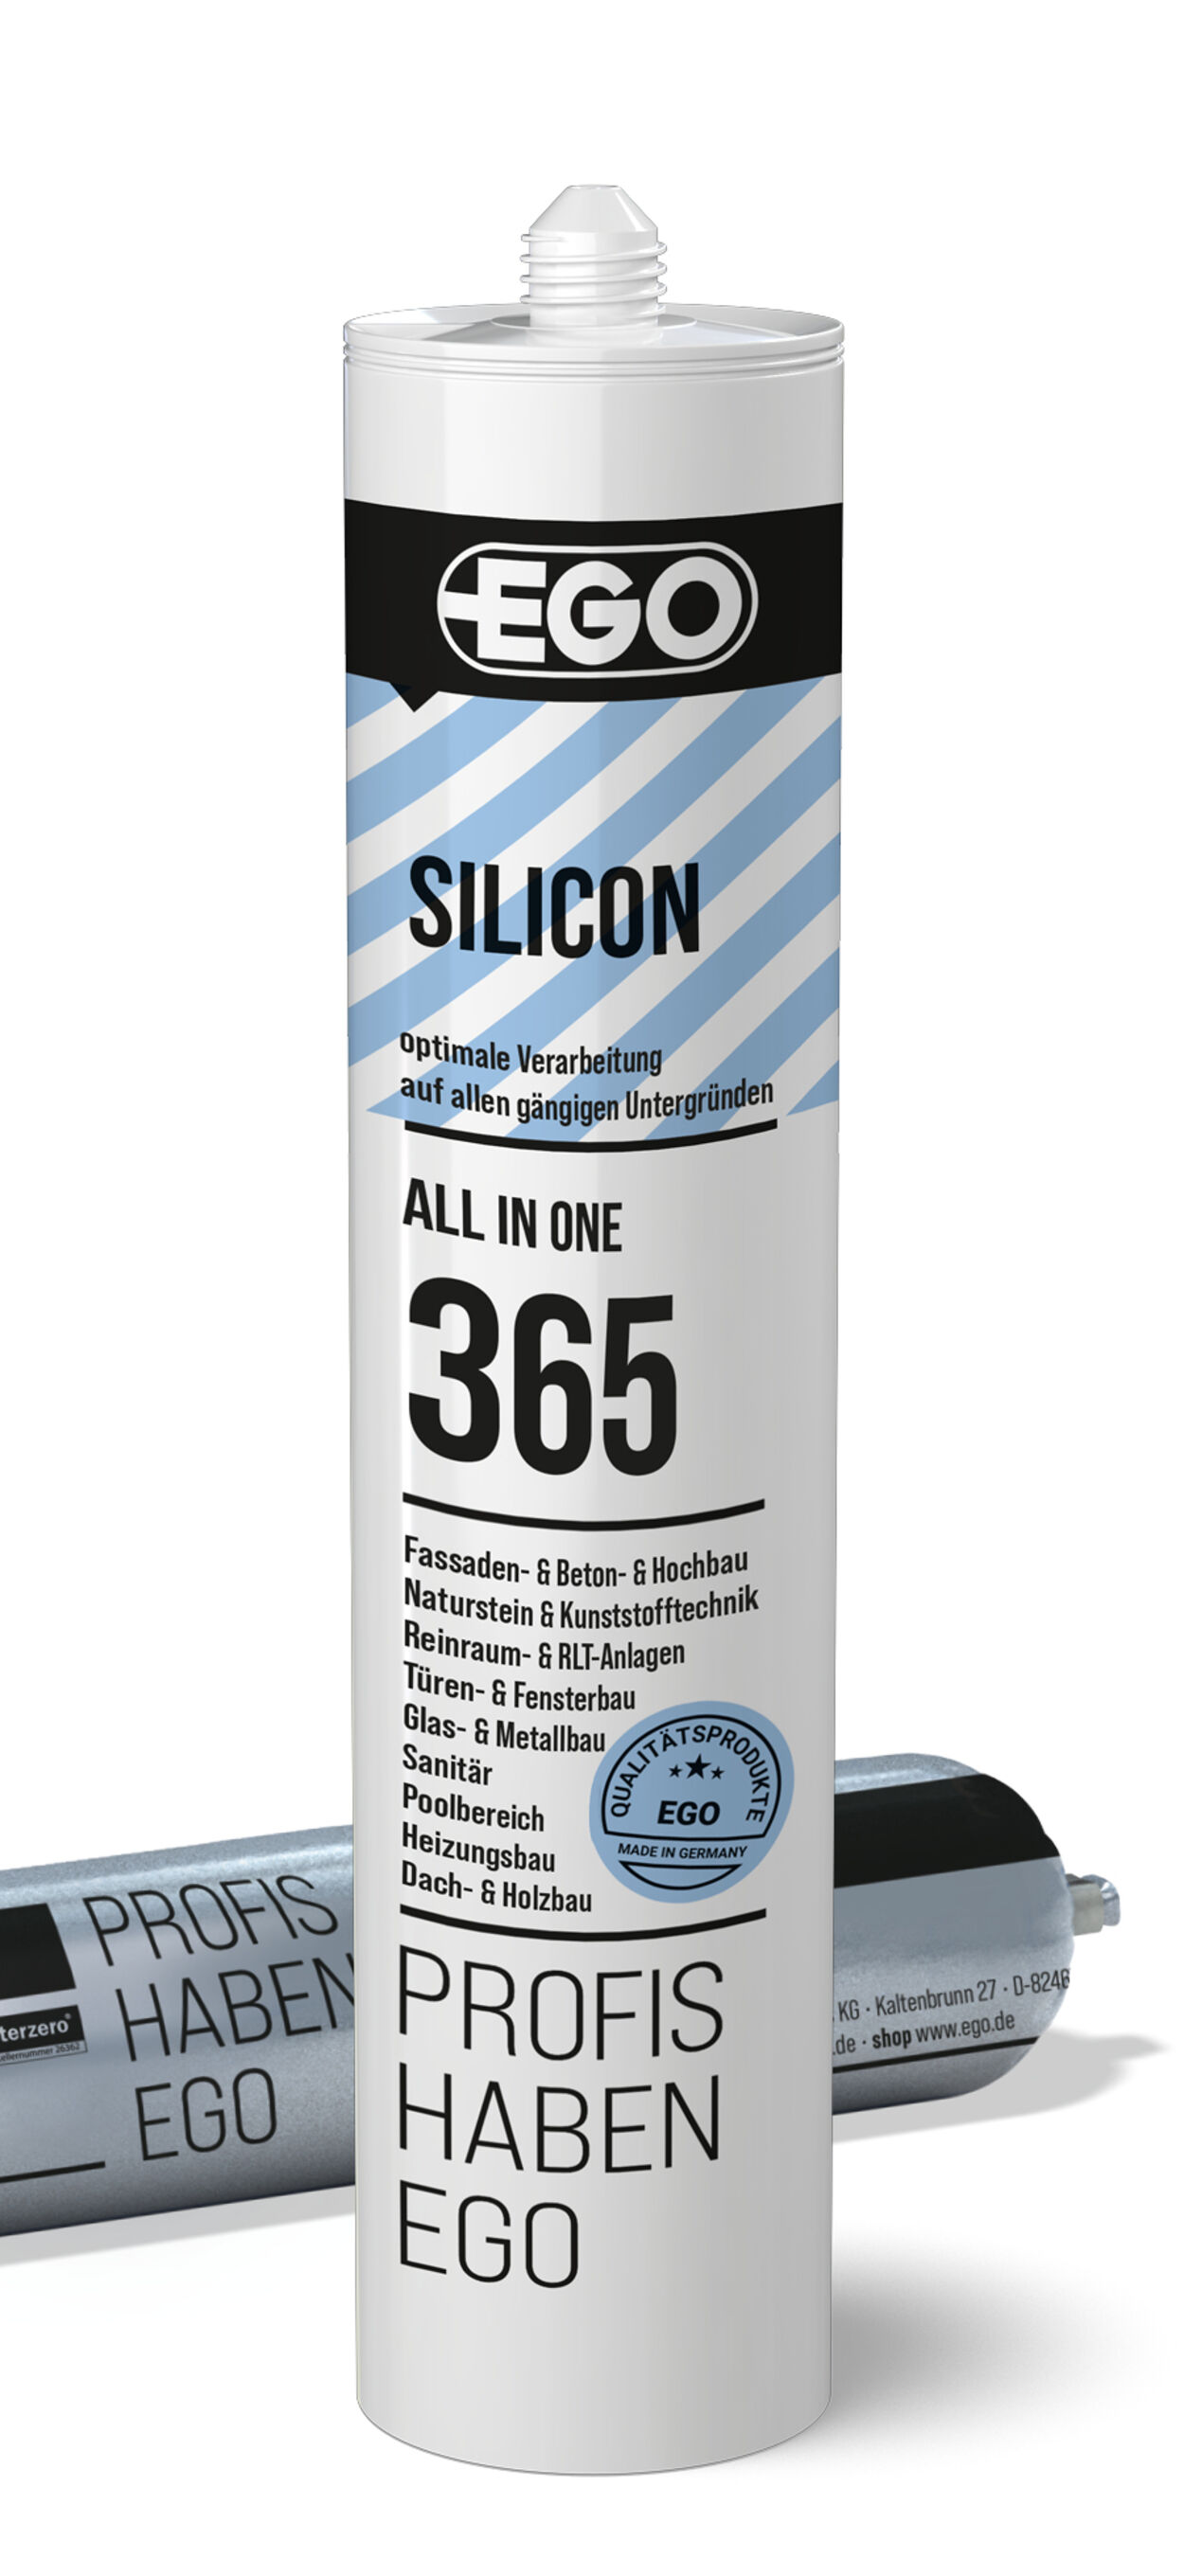 Premium silicone sealant for all common substrates